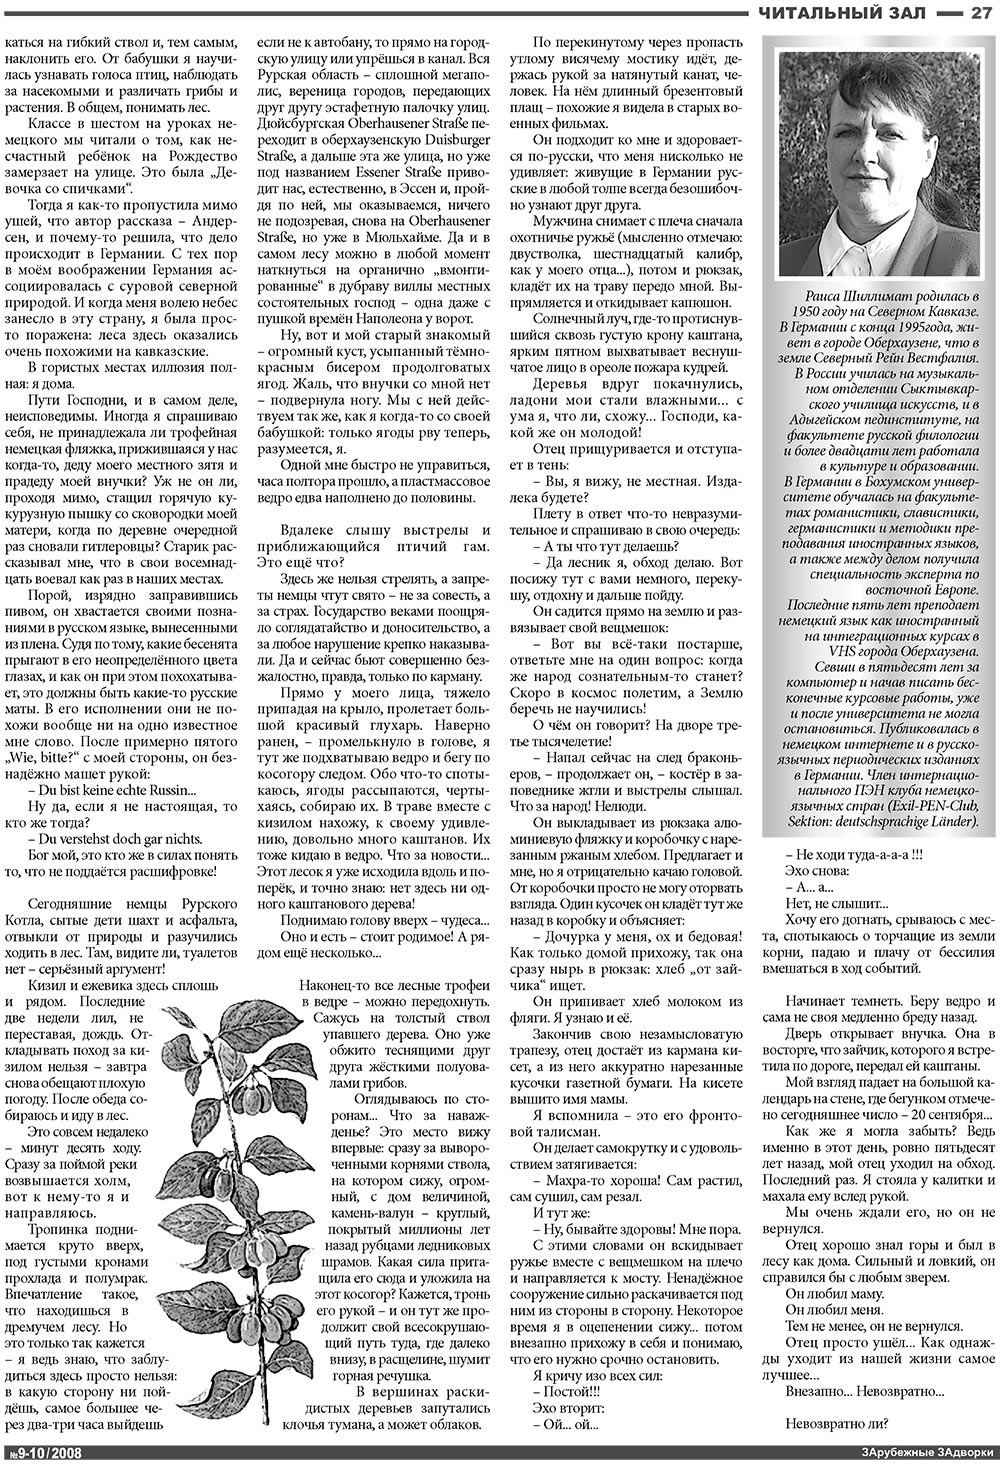 Известия BW (газета). 2008 год, номер 10, стр. 27